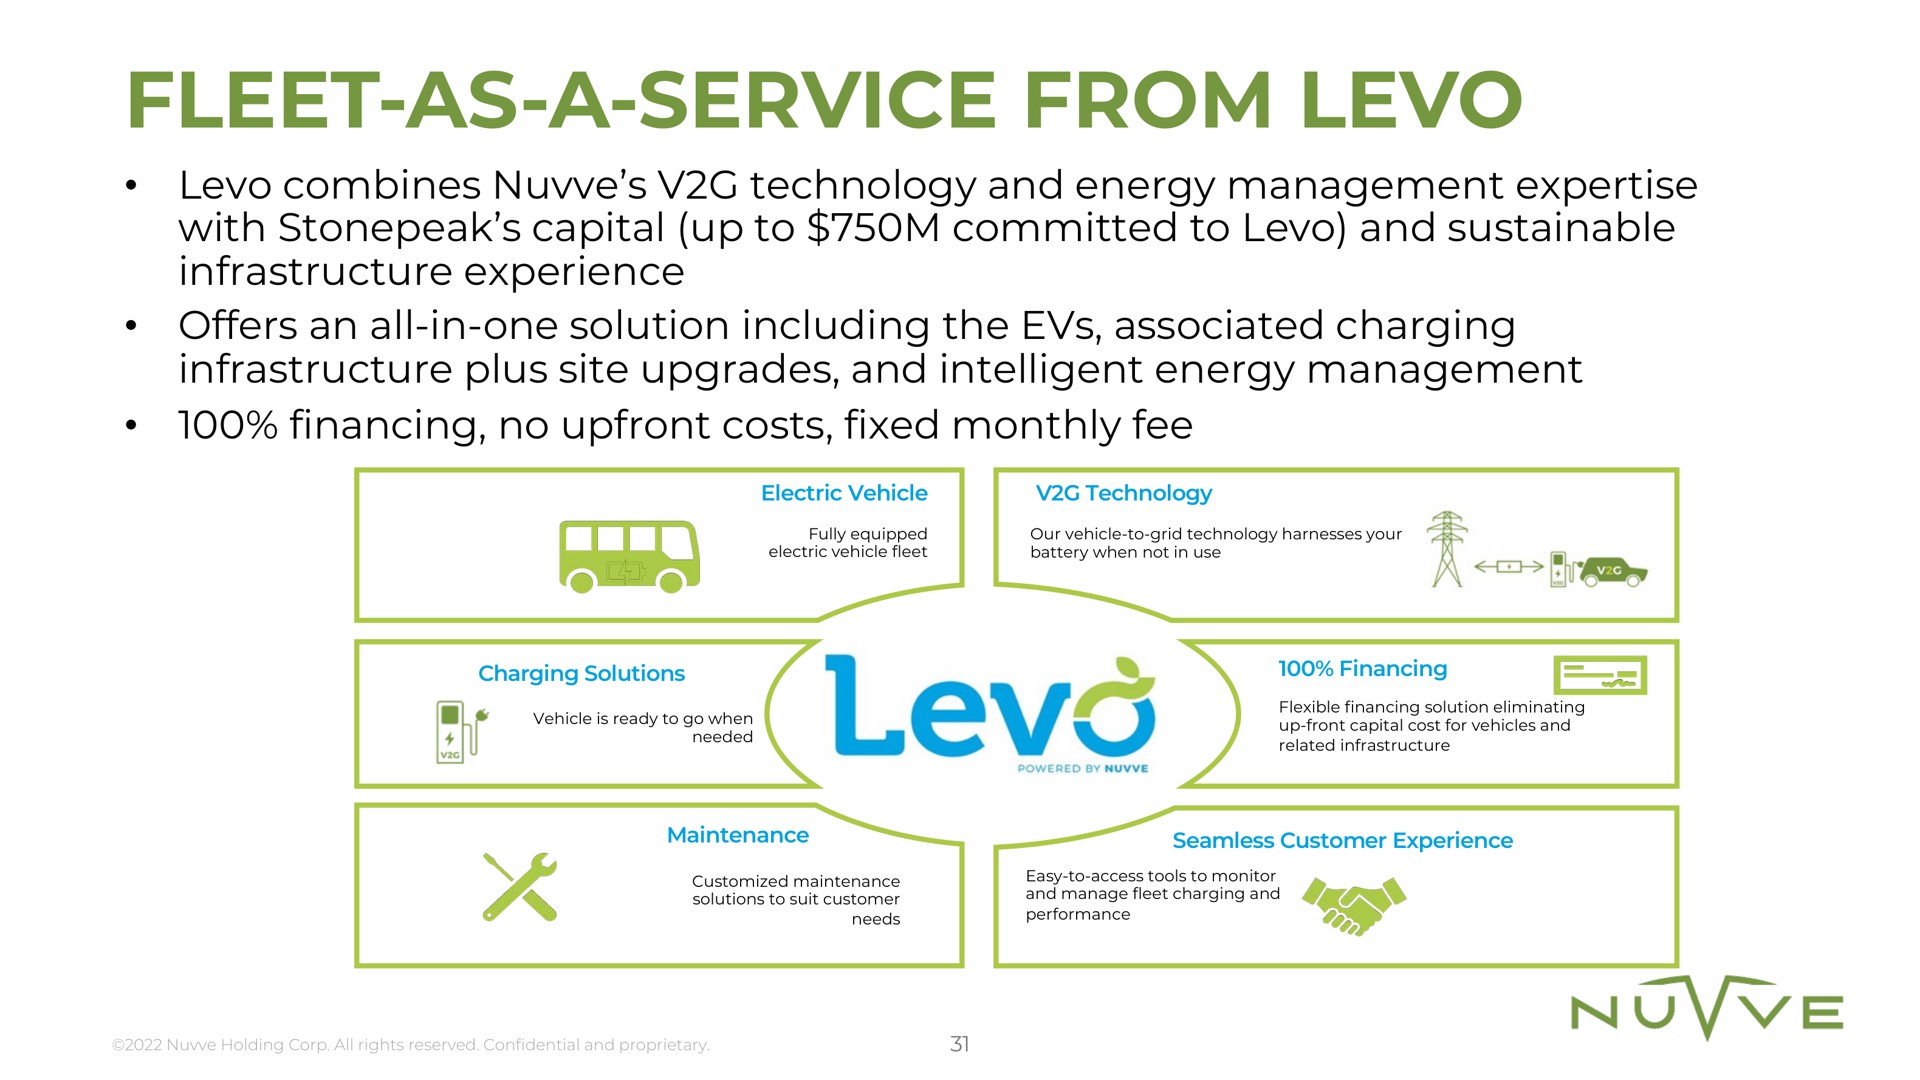 fleet as a service from levo | Nuvve